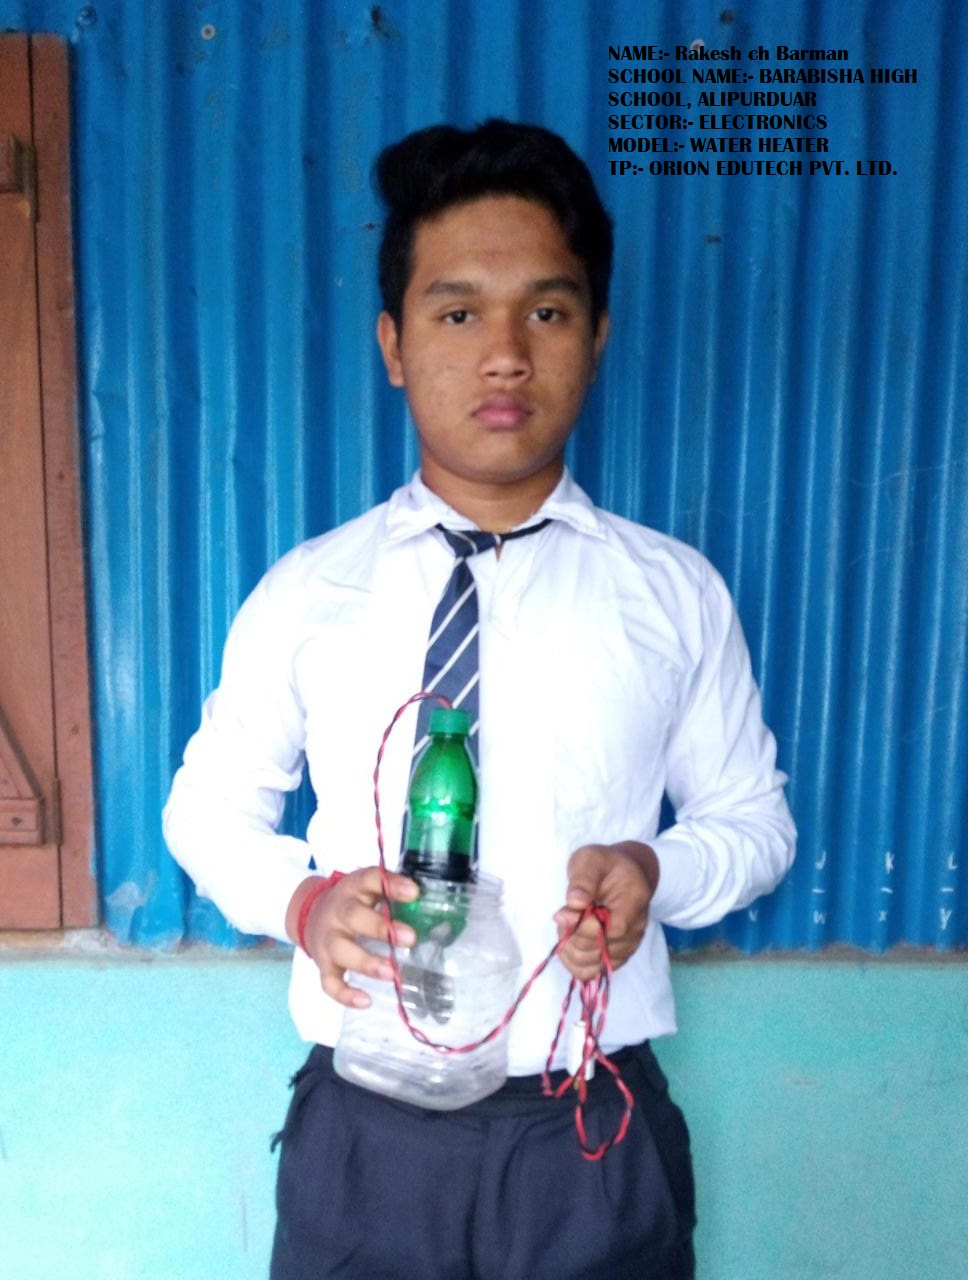 Student of Barabisha High School (H.S)